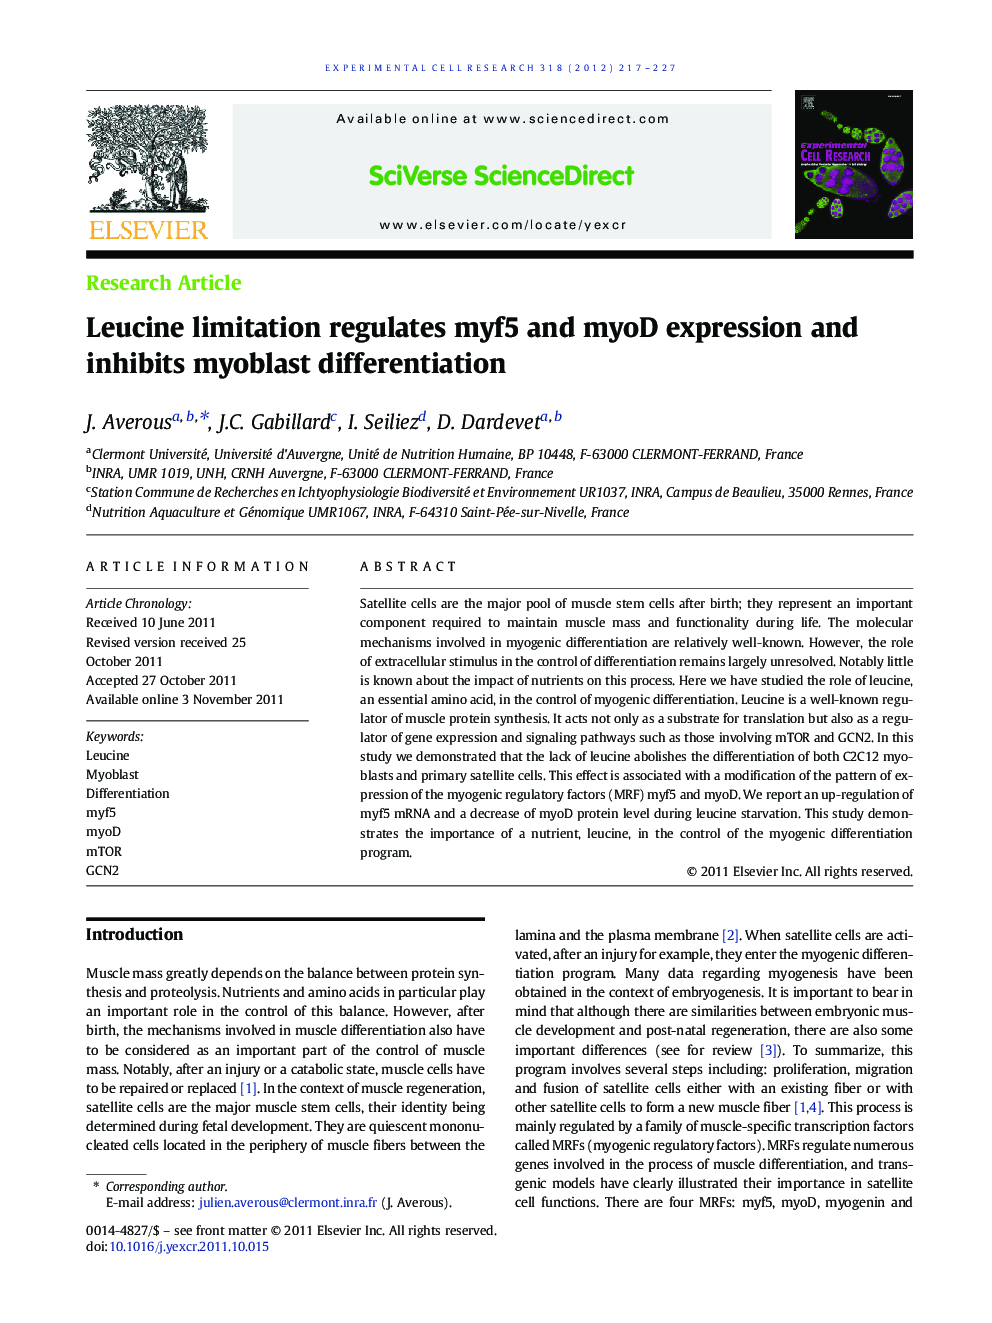 Leucine limitation regulates myf5 and myoD expression and inhibits myoblast differentiation